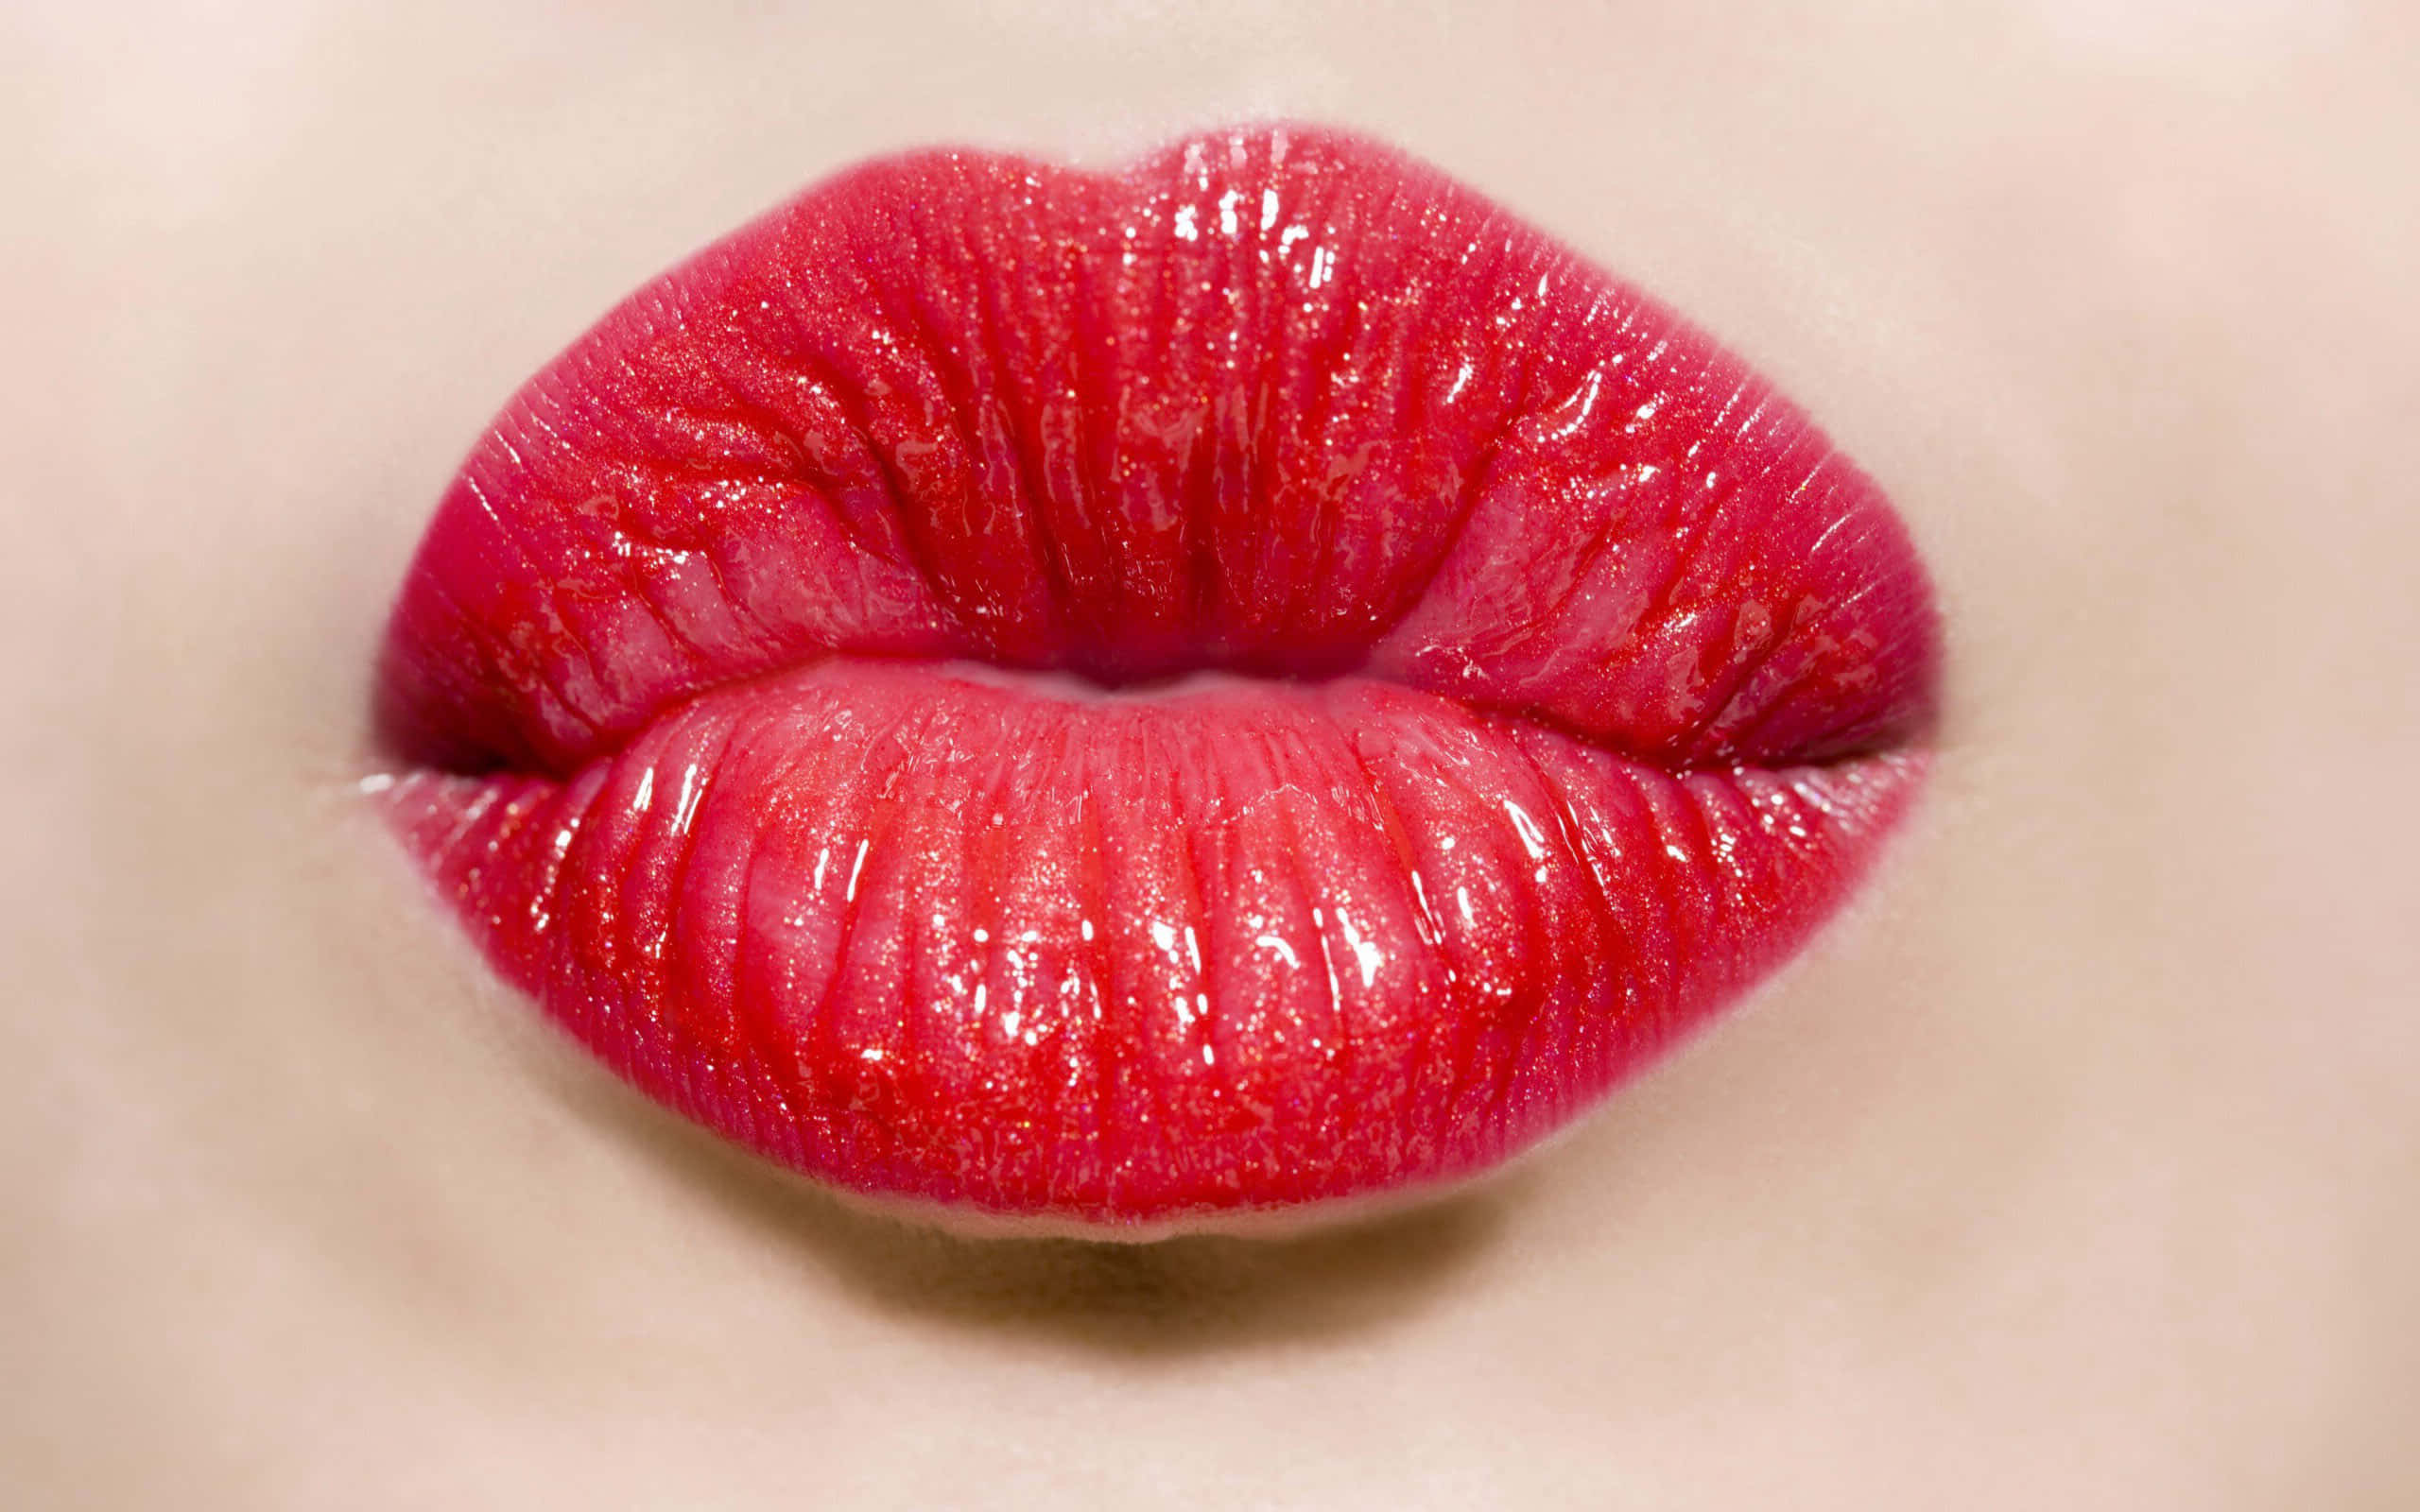 Sensual Red Lips Closeup